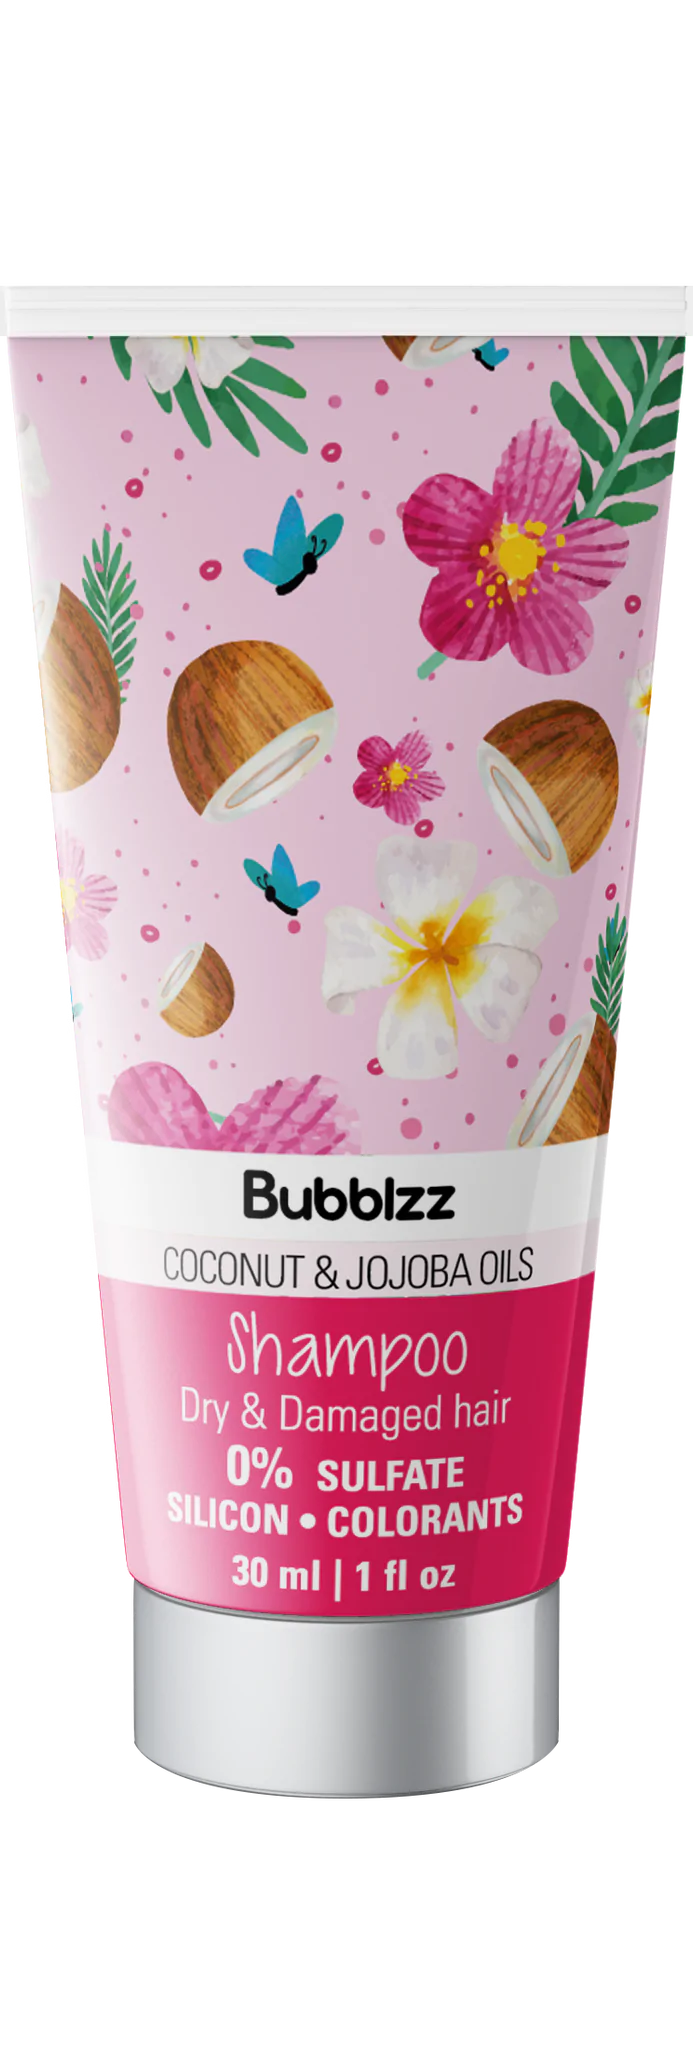 Bubblzz-Mini Shampoo For Dry & Damaged Hair